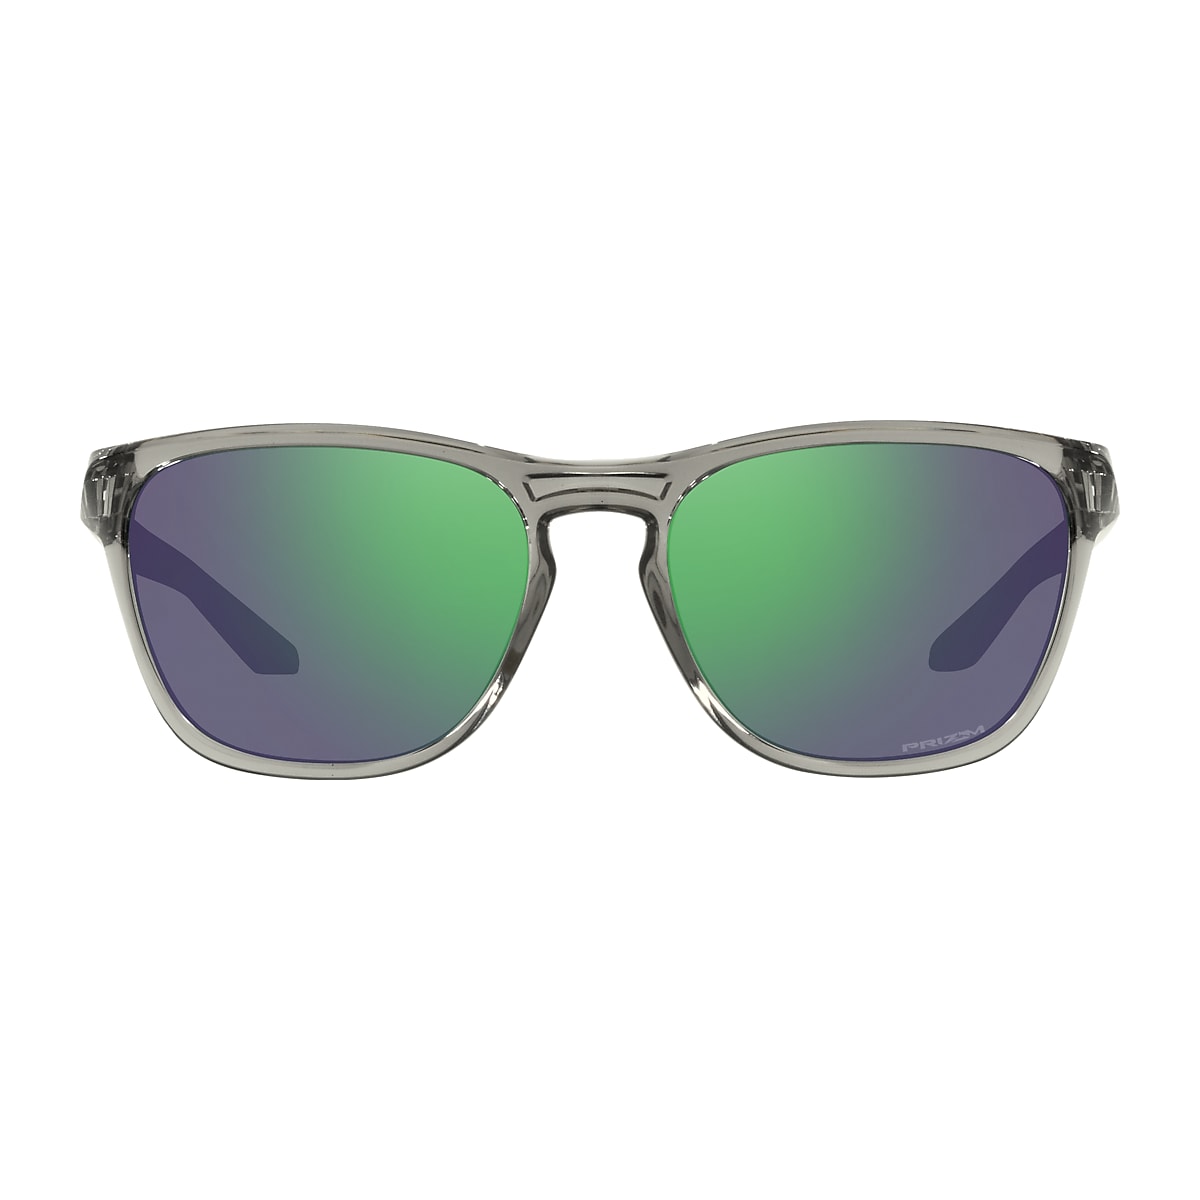 Oakley Men's Manorburn Sunglasses